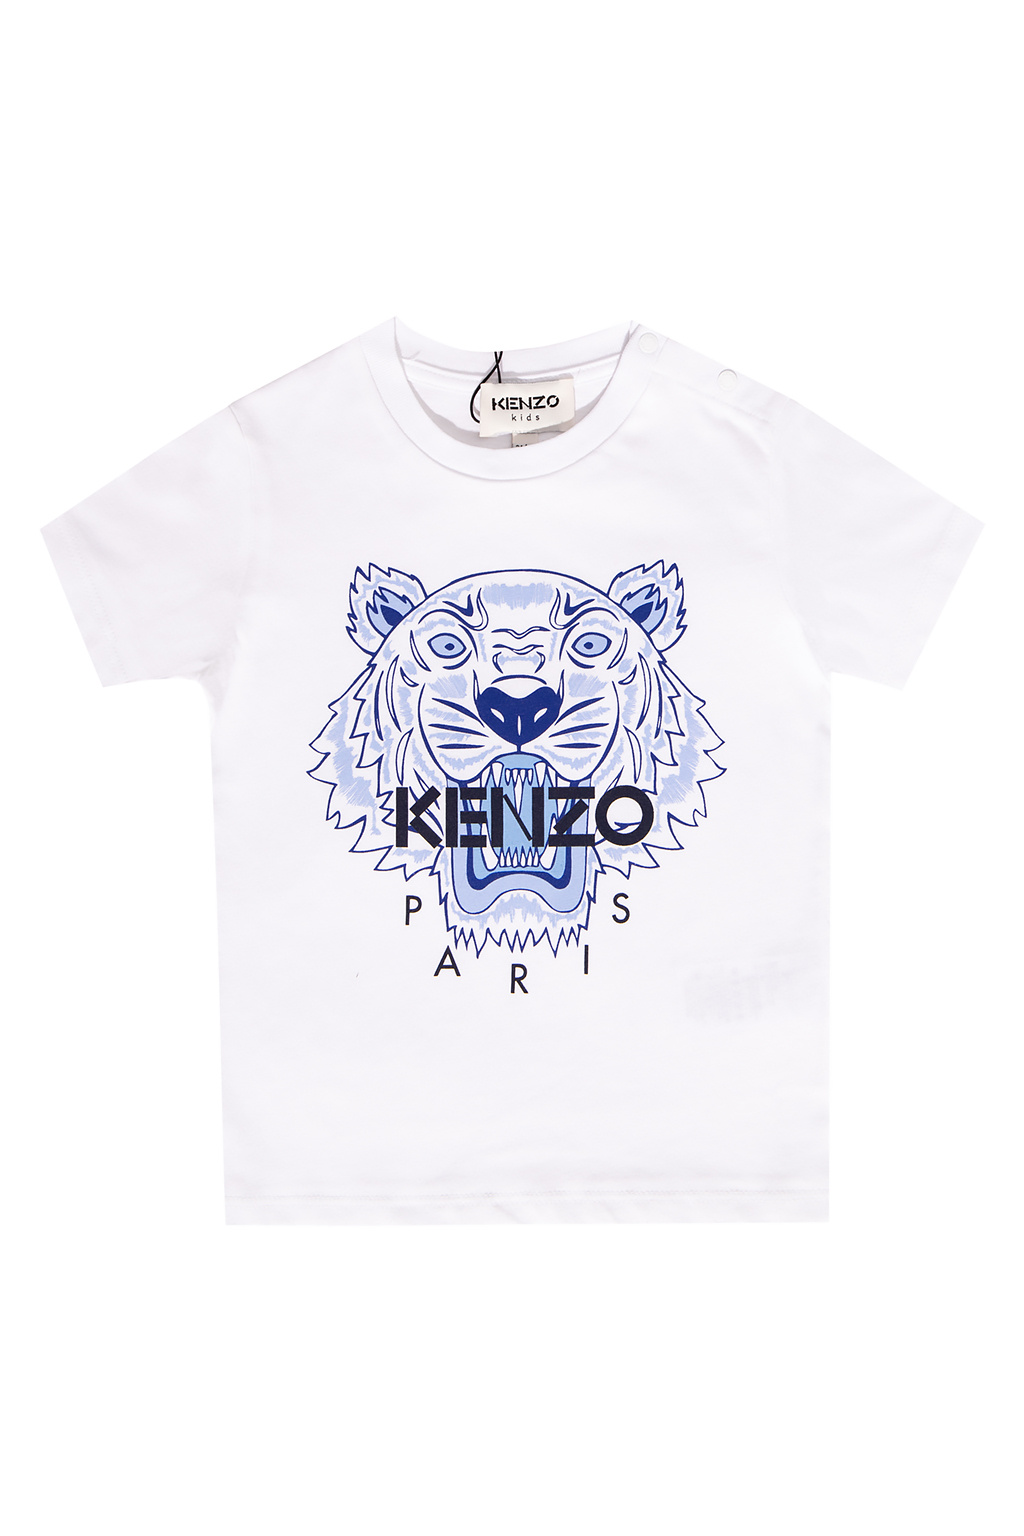 Overvloed journalist Voorafgaan Cropped Cashmere Hooded Sweatshirt Mens Navy - shirt Kenzo Kids - t-shirt  head T - IetpShops Belgium